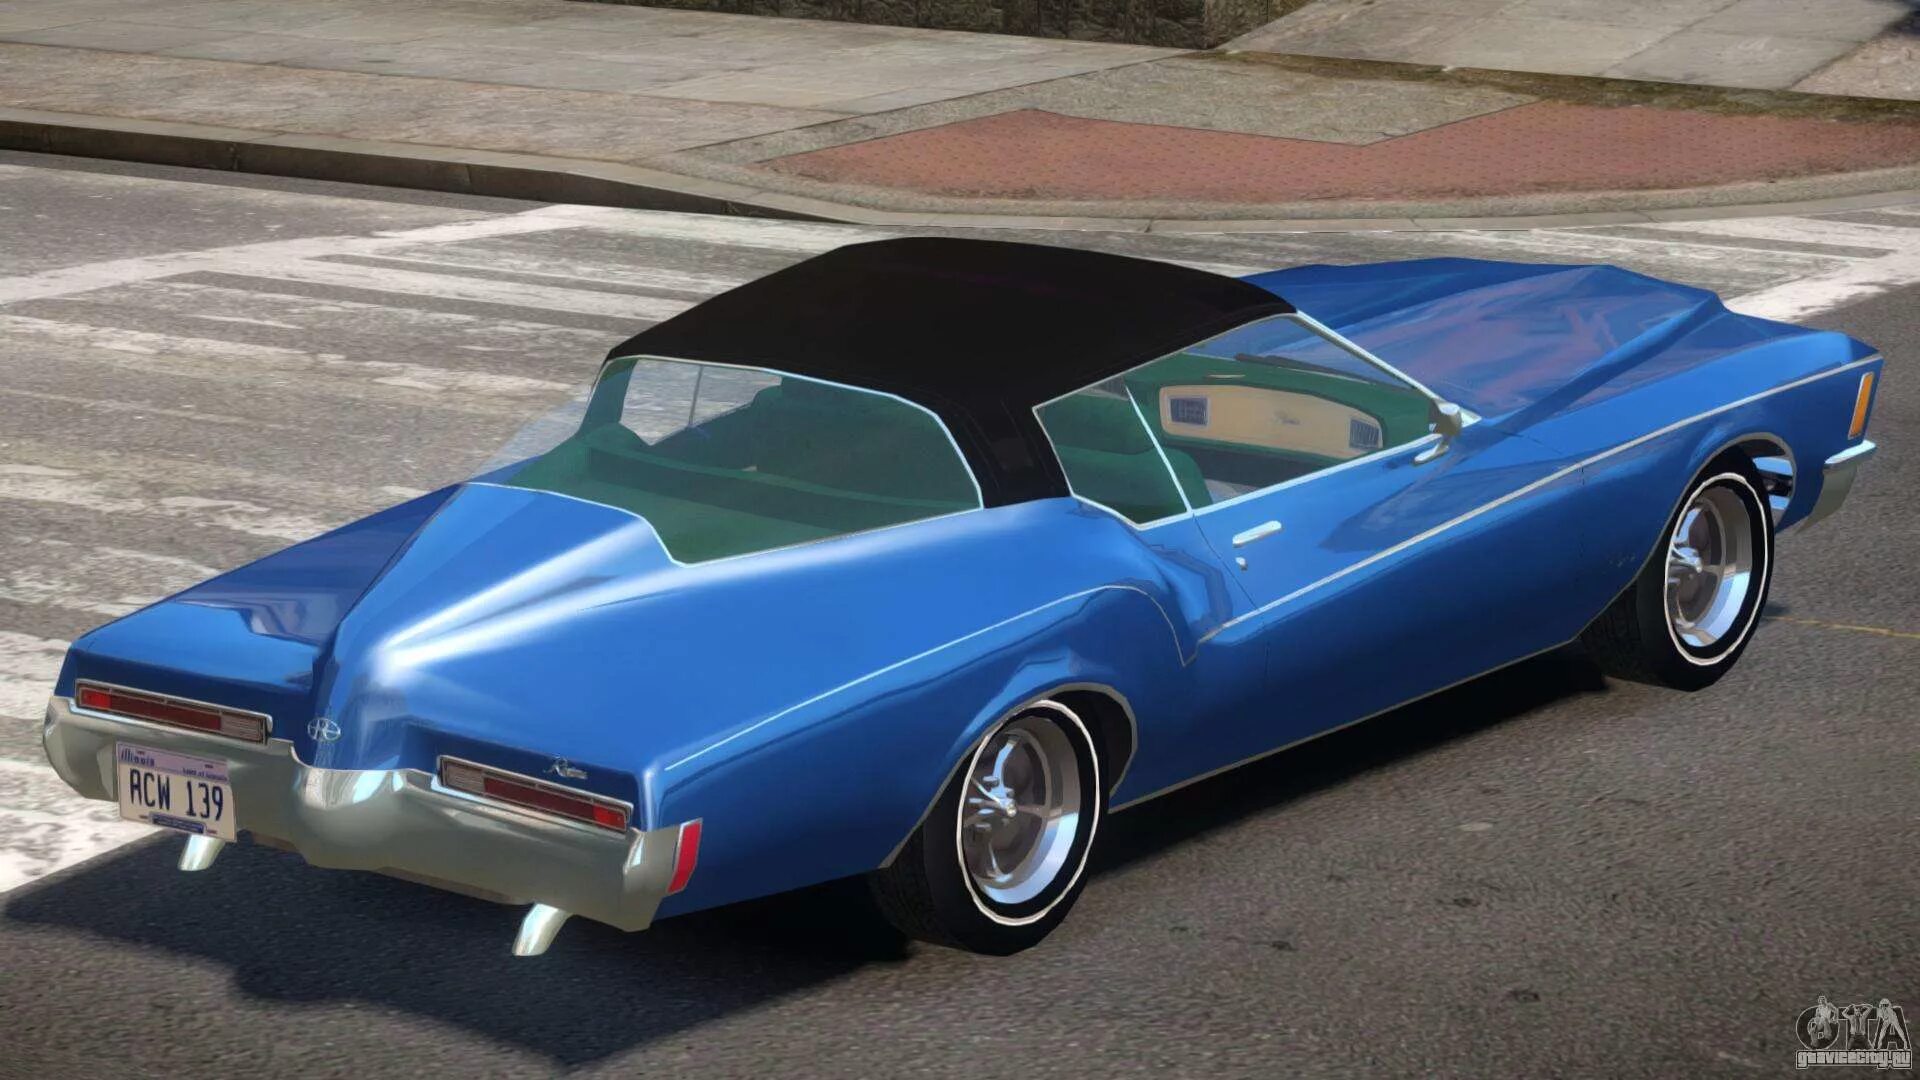 Riviera 1972. Buick Riviera 1972. Buick Riviera 1969. Buick Riviera GTA 5. Buick Riviera 1972 Toy.